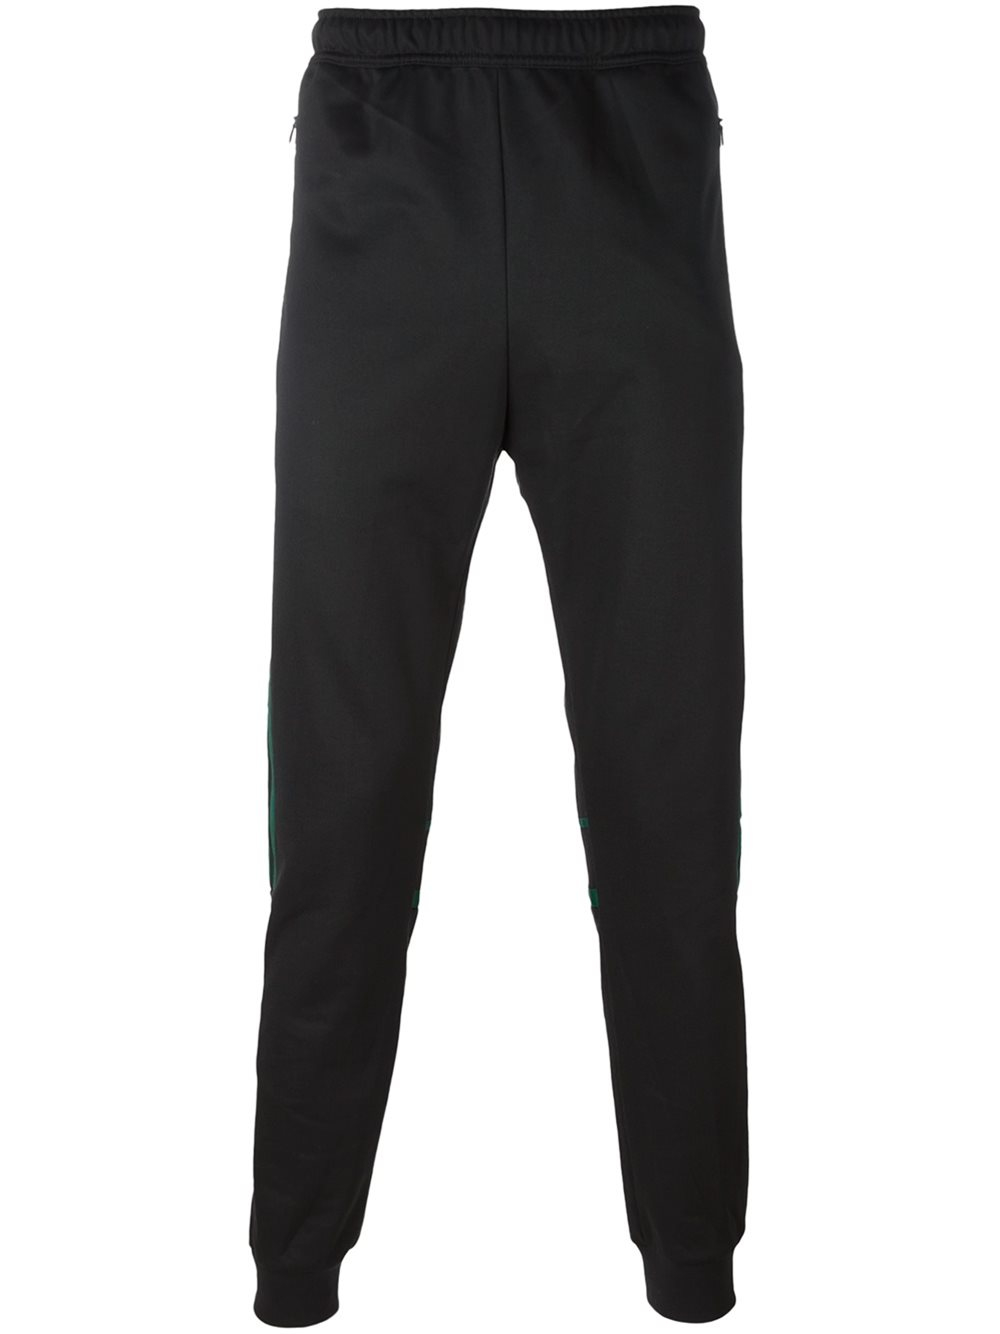 adidas Originals Cotton 'clr84' Track Pants in Black for Men - Lyst